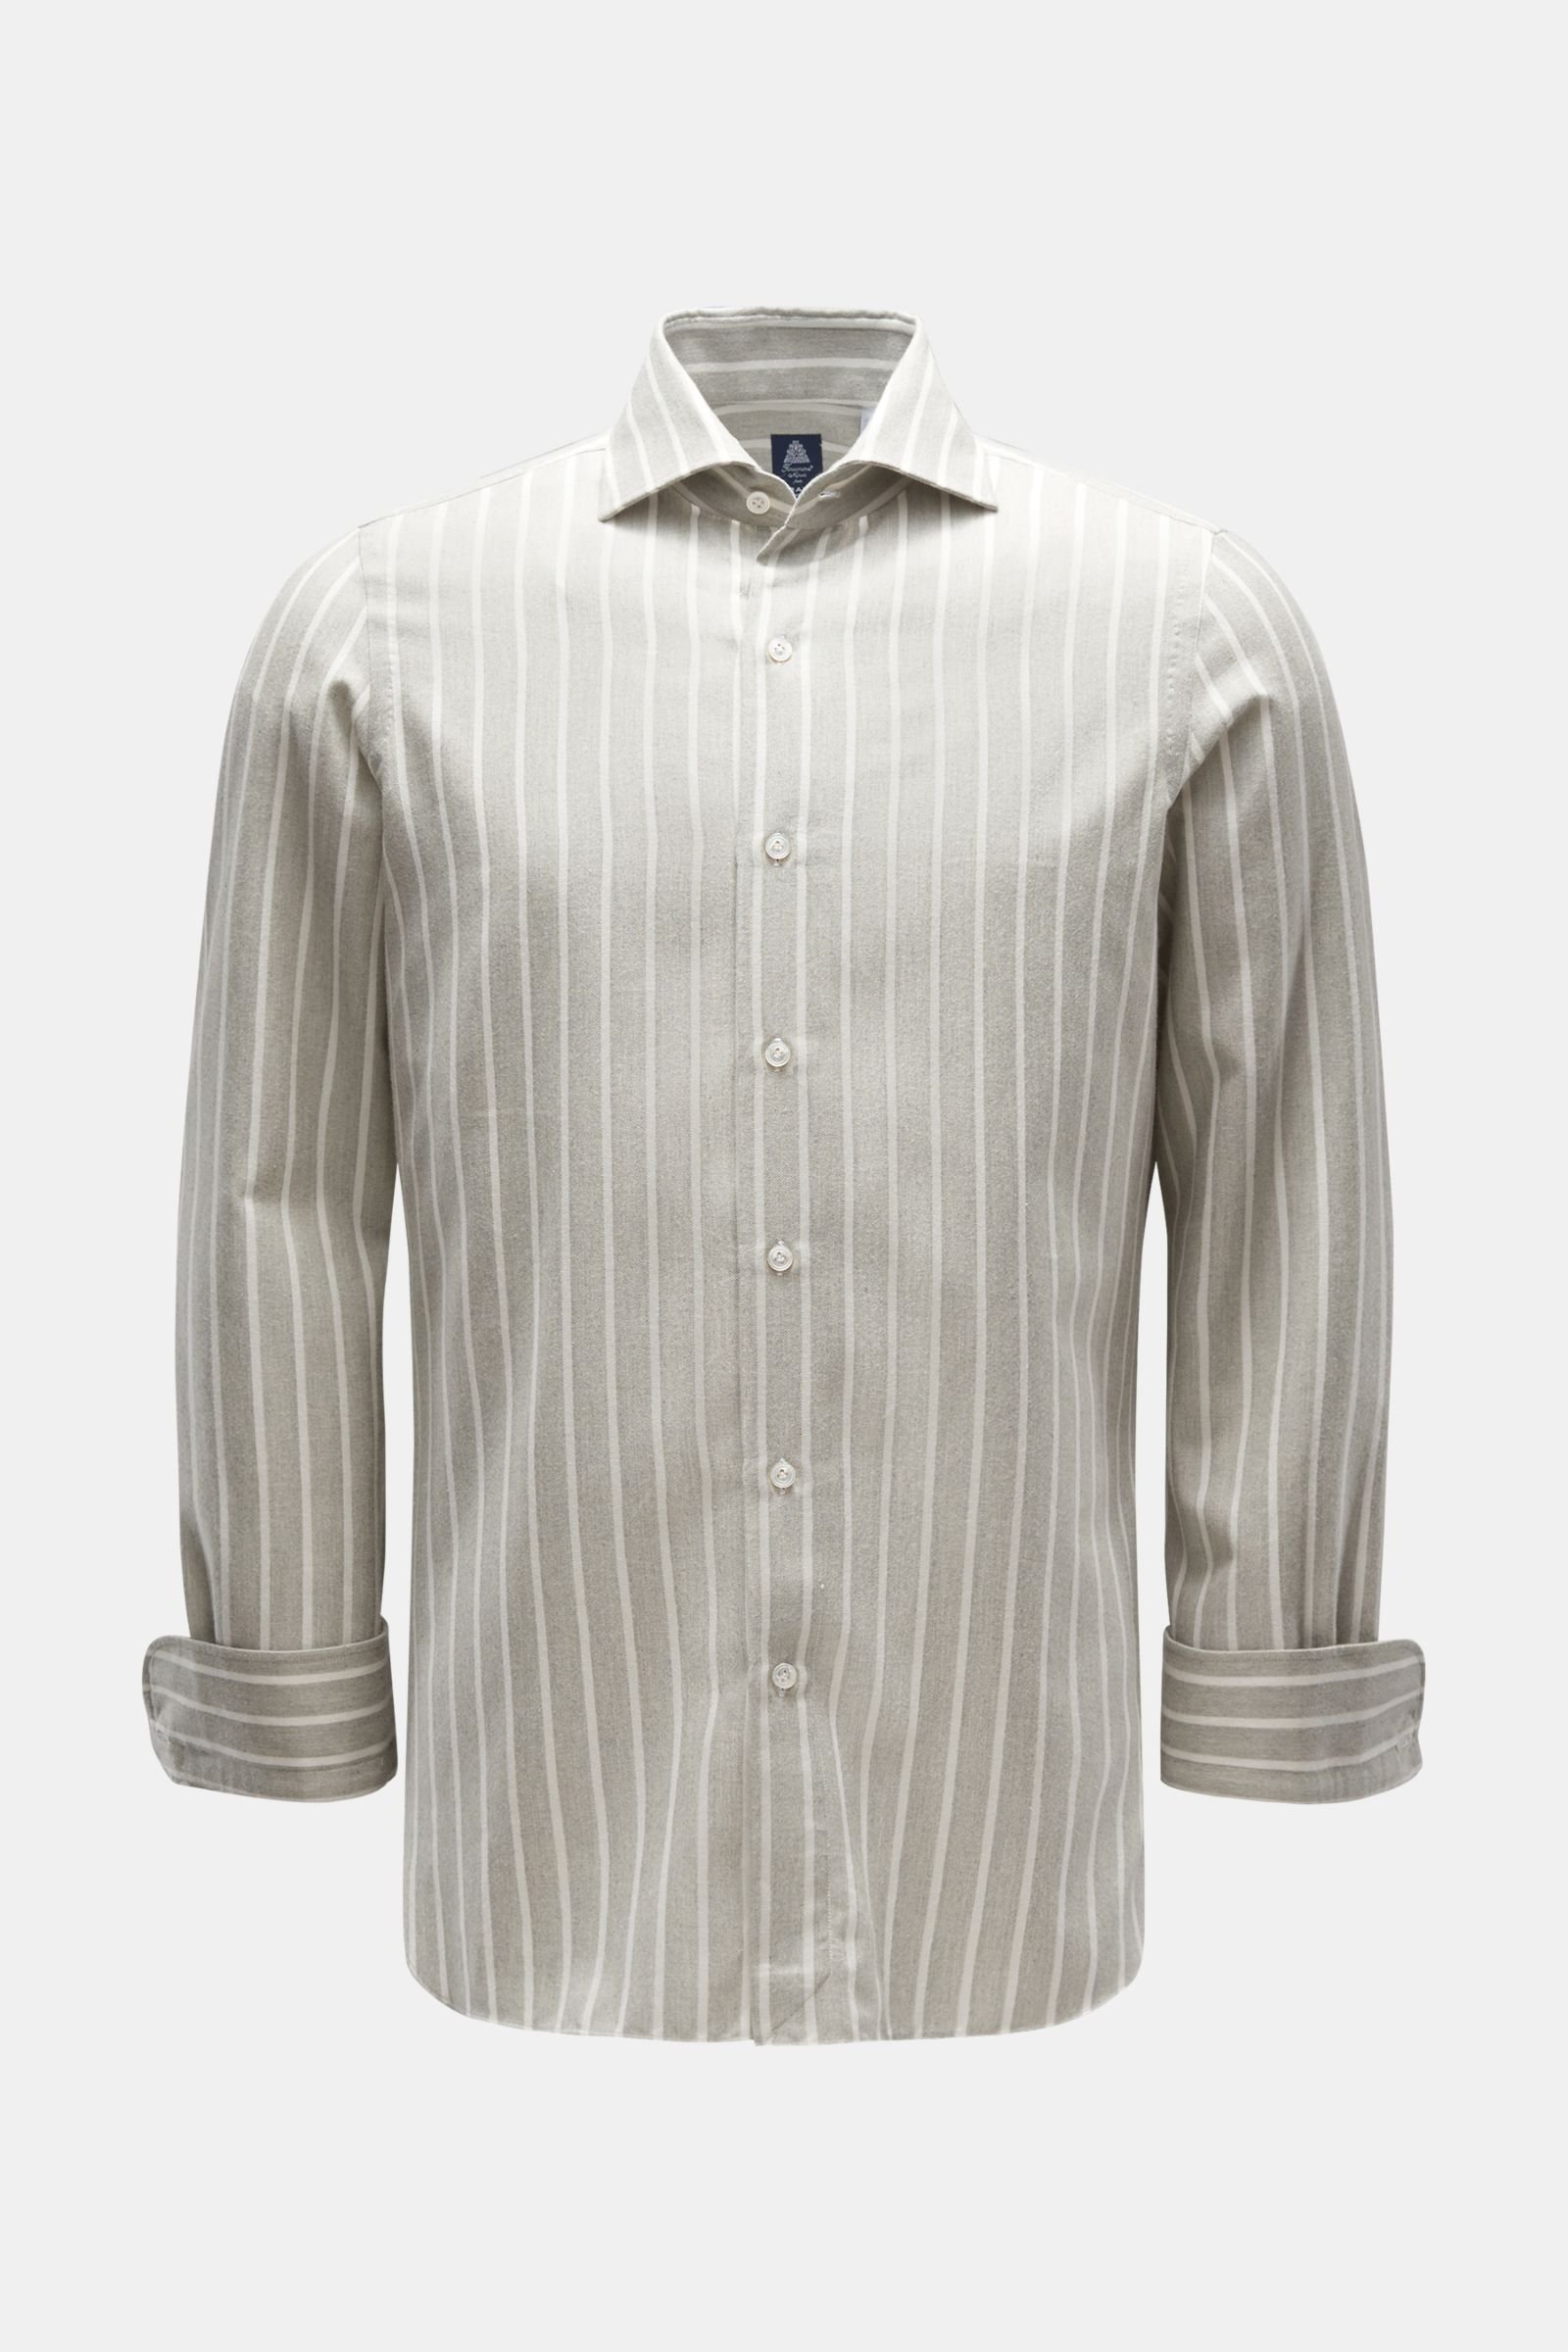 Flannel shirt 'Eduardo Napoli' shark collar light grey/off-white striped